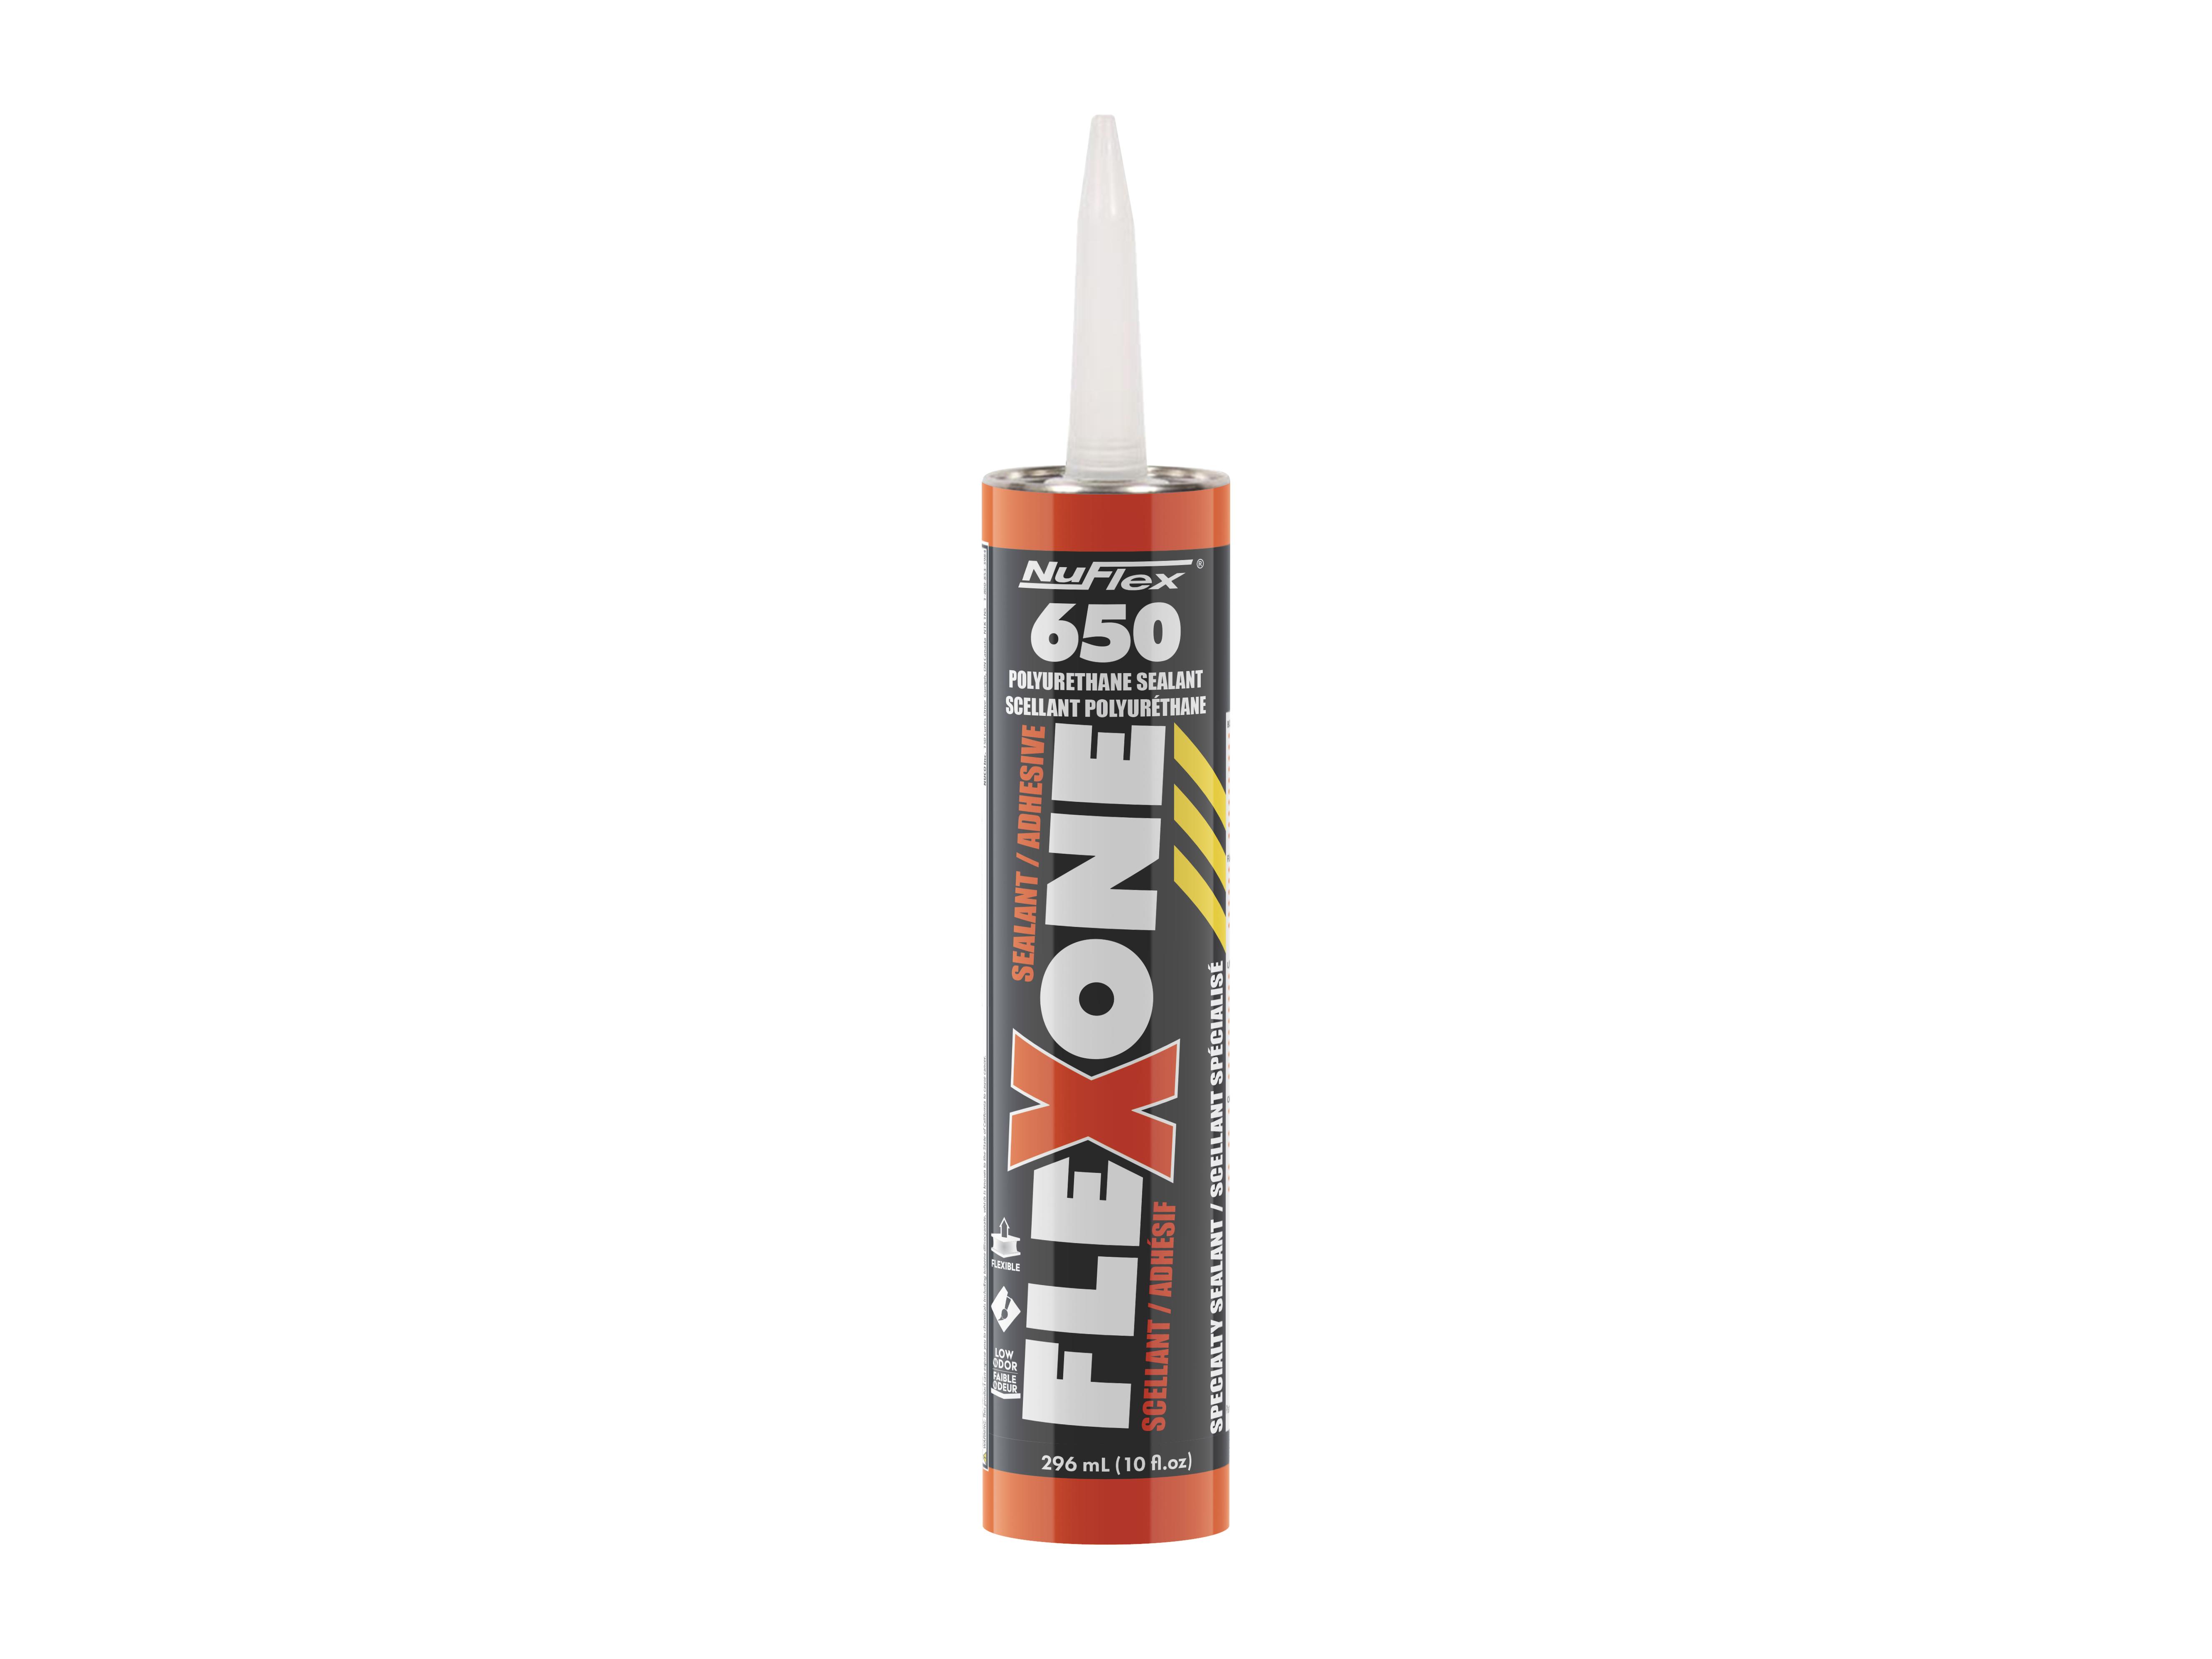 NuFlex 650 FLEXOne High Performance Polyurethane Sealant Adhesive 296 ml Grey